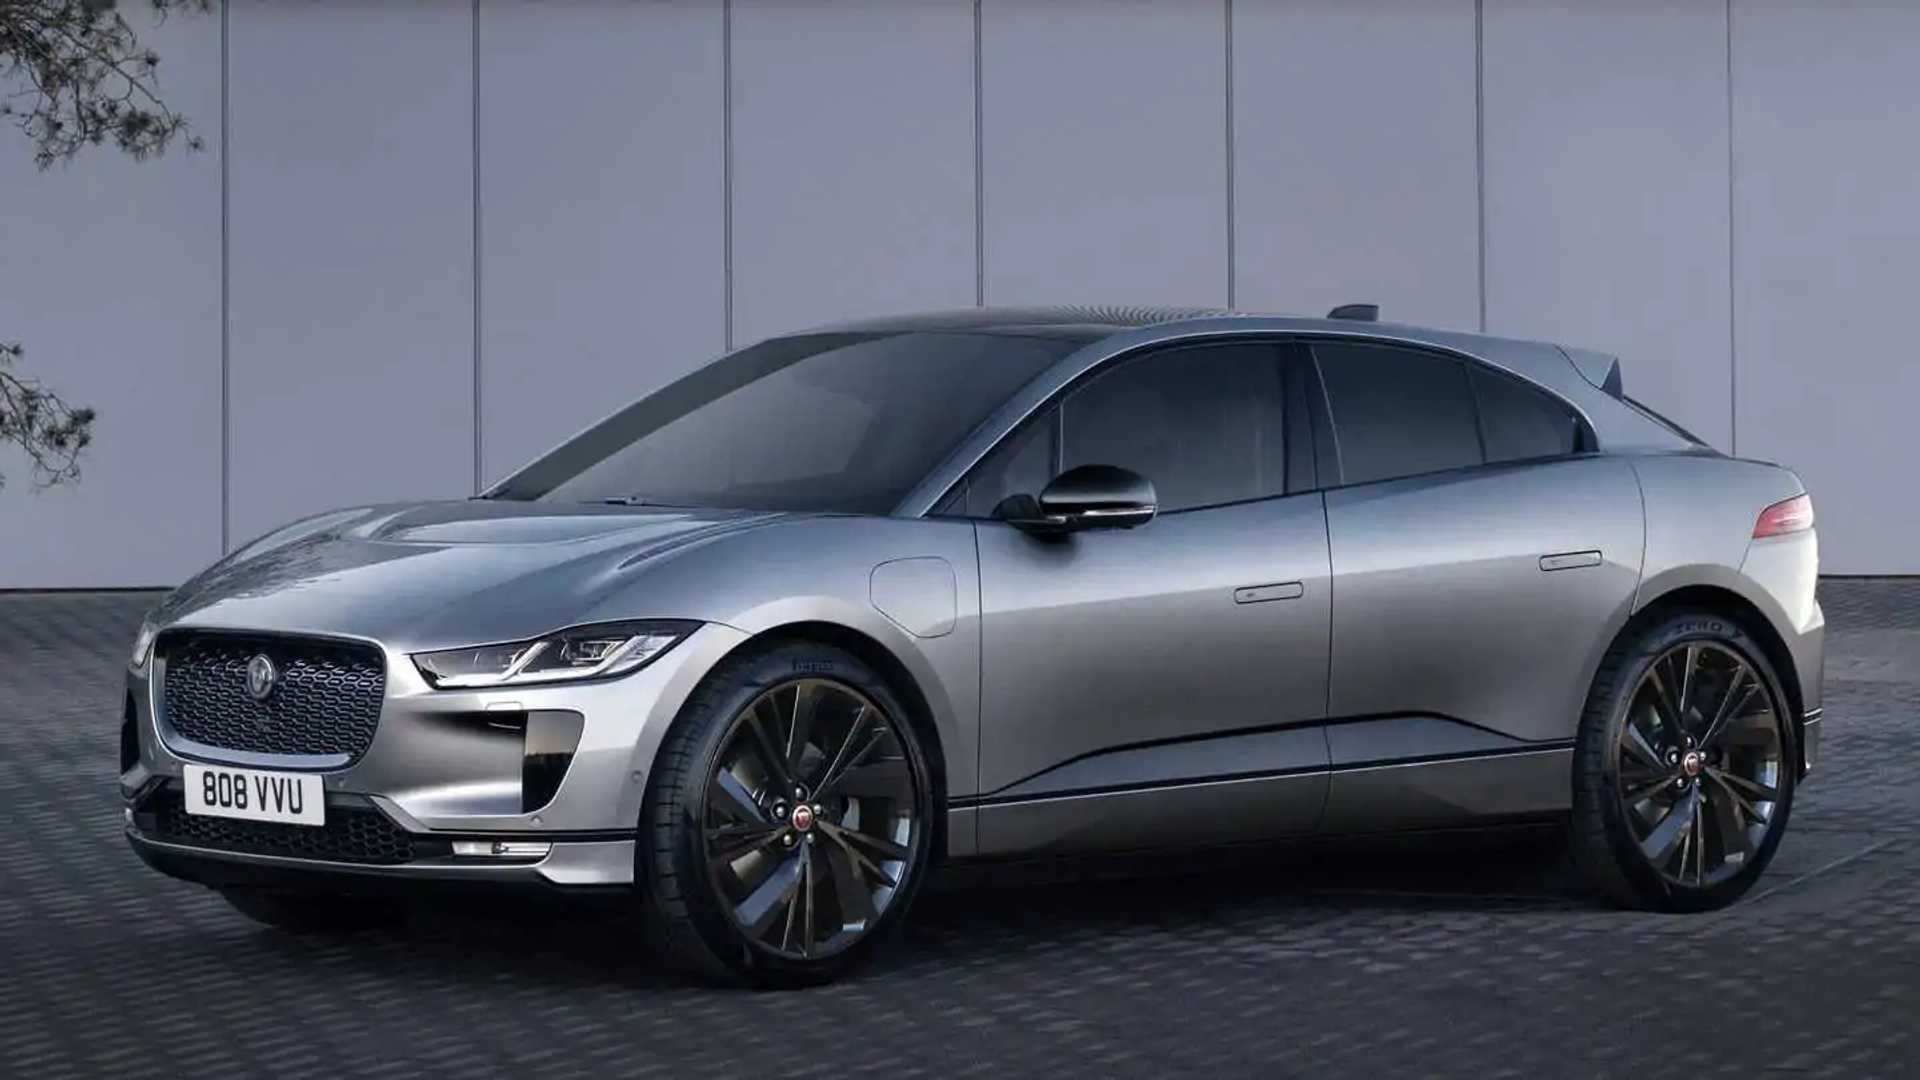 Jaguar I-PACE Sales Continue To Decline In Q1 2022